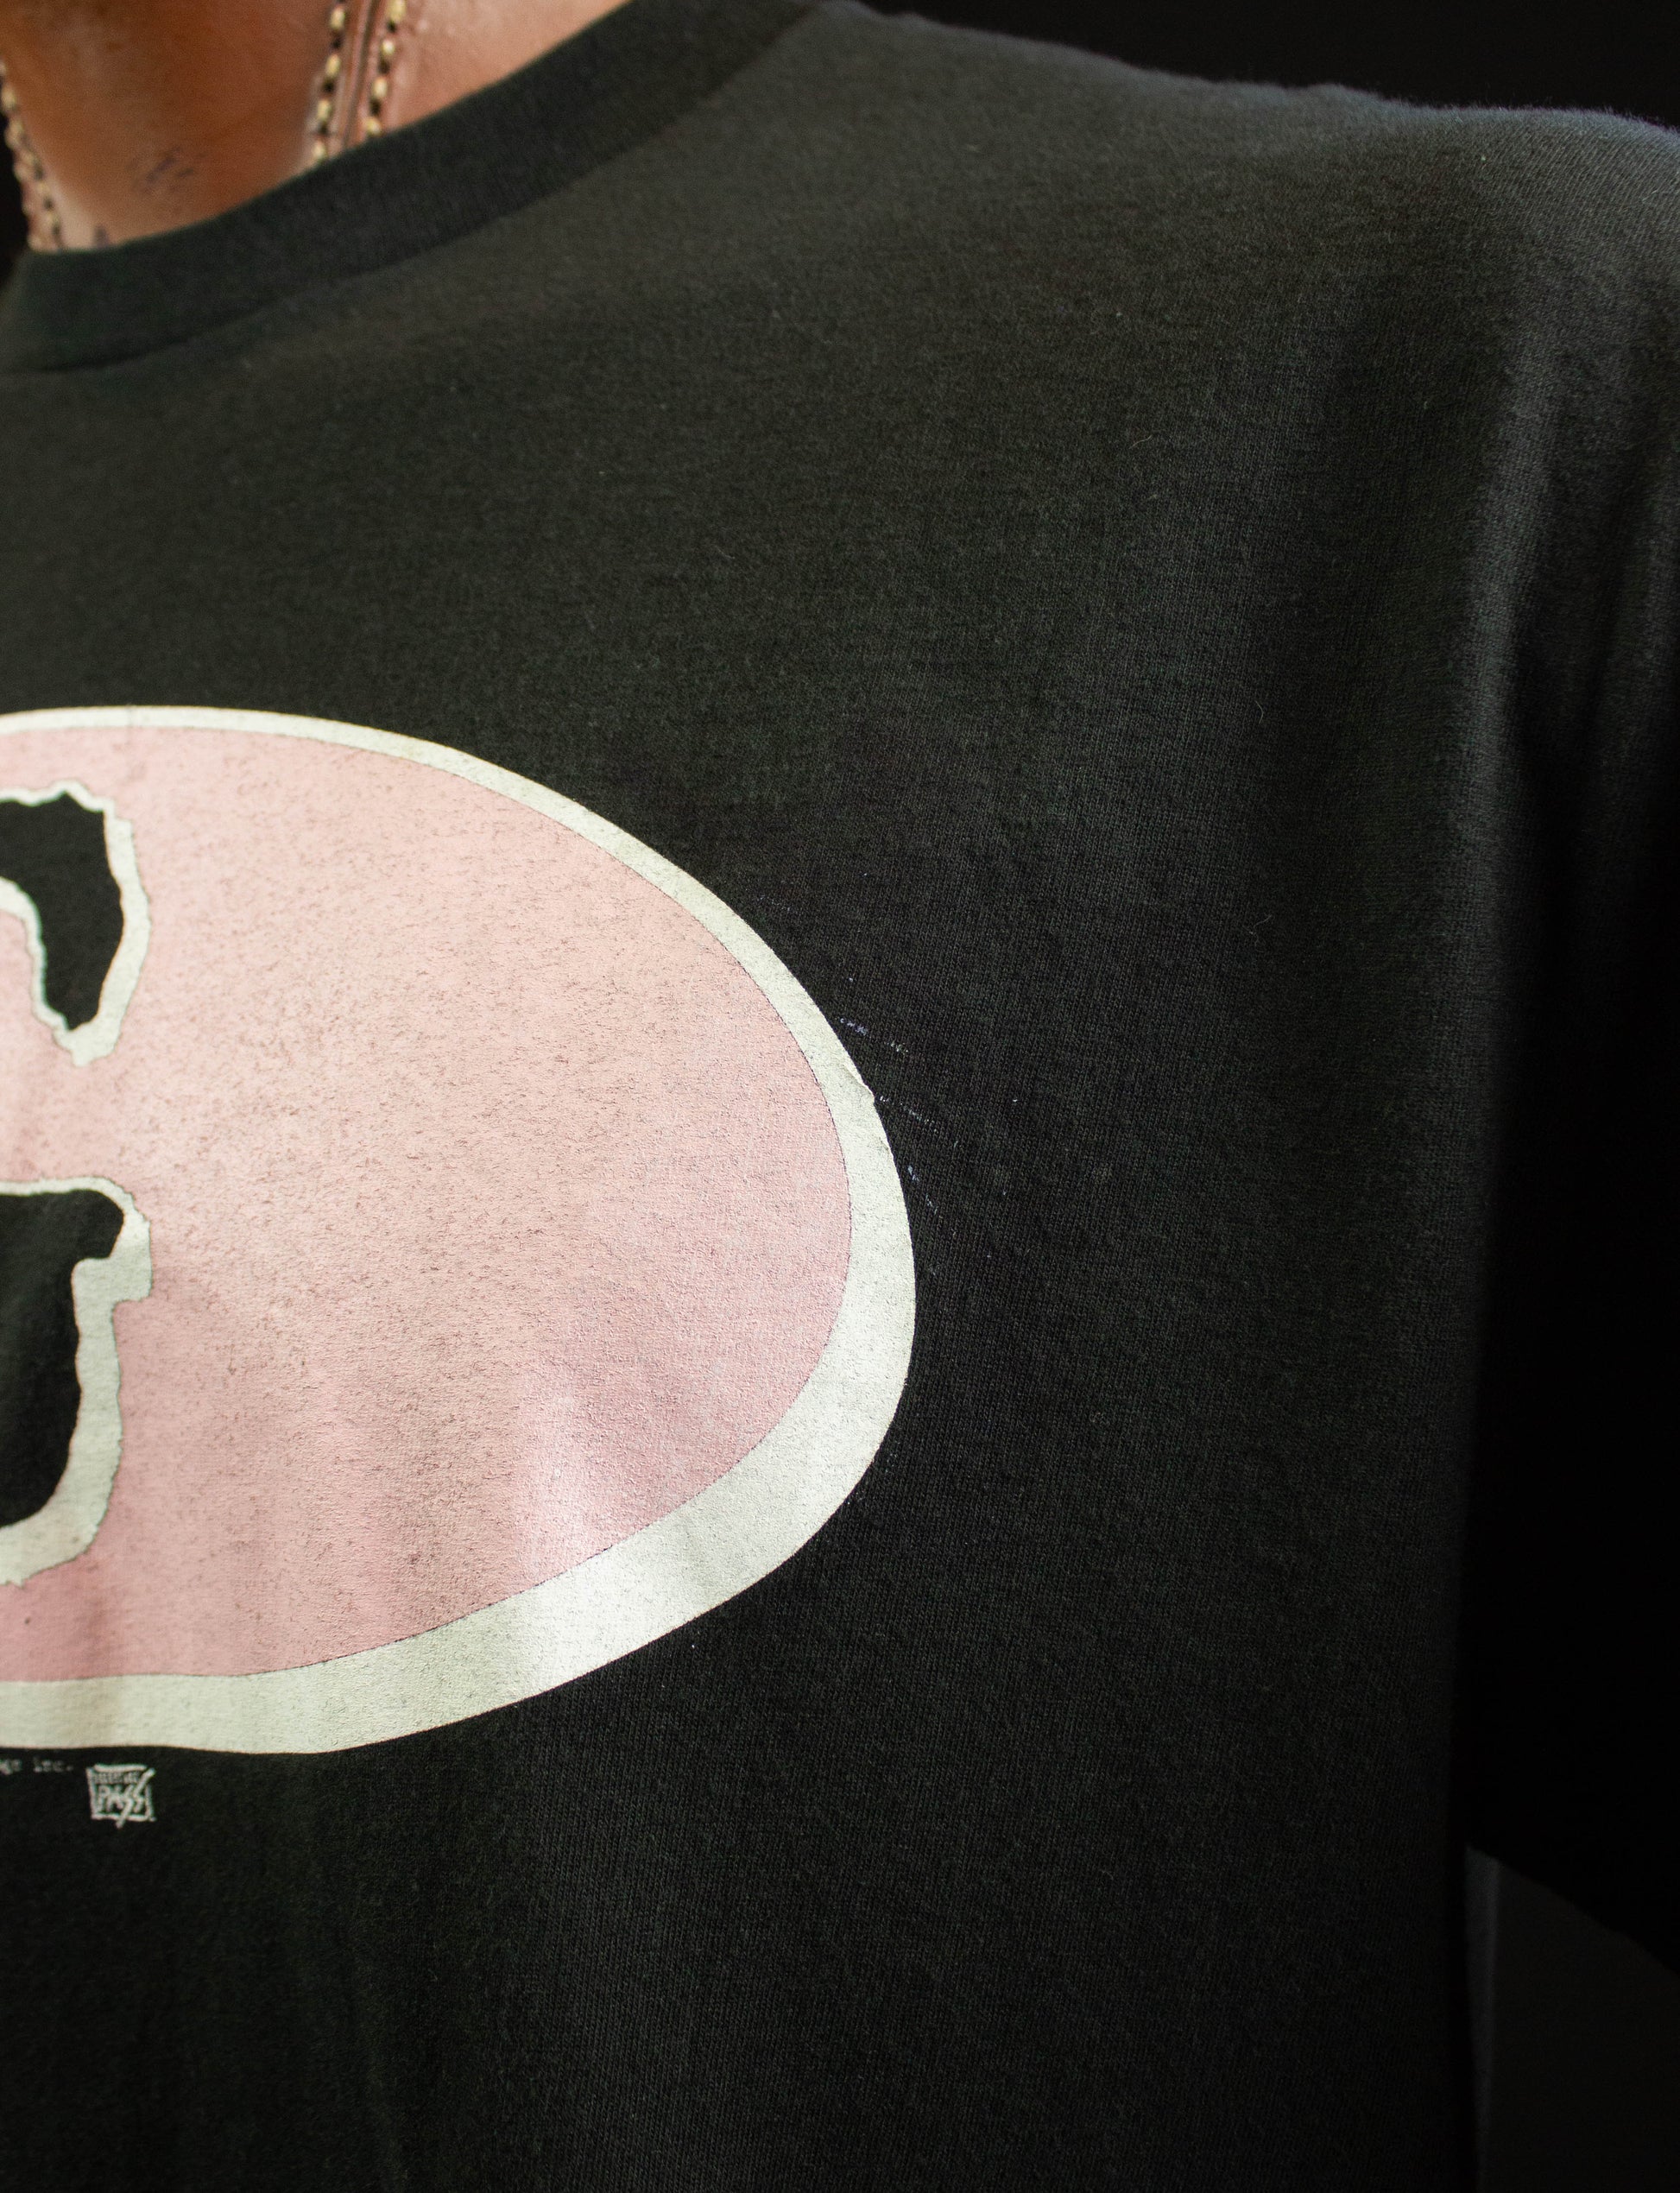 Vintage Garbage Concert T Shirt 90s G Oval Logo Black and Pink XL